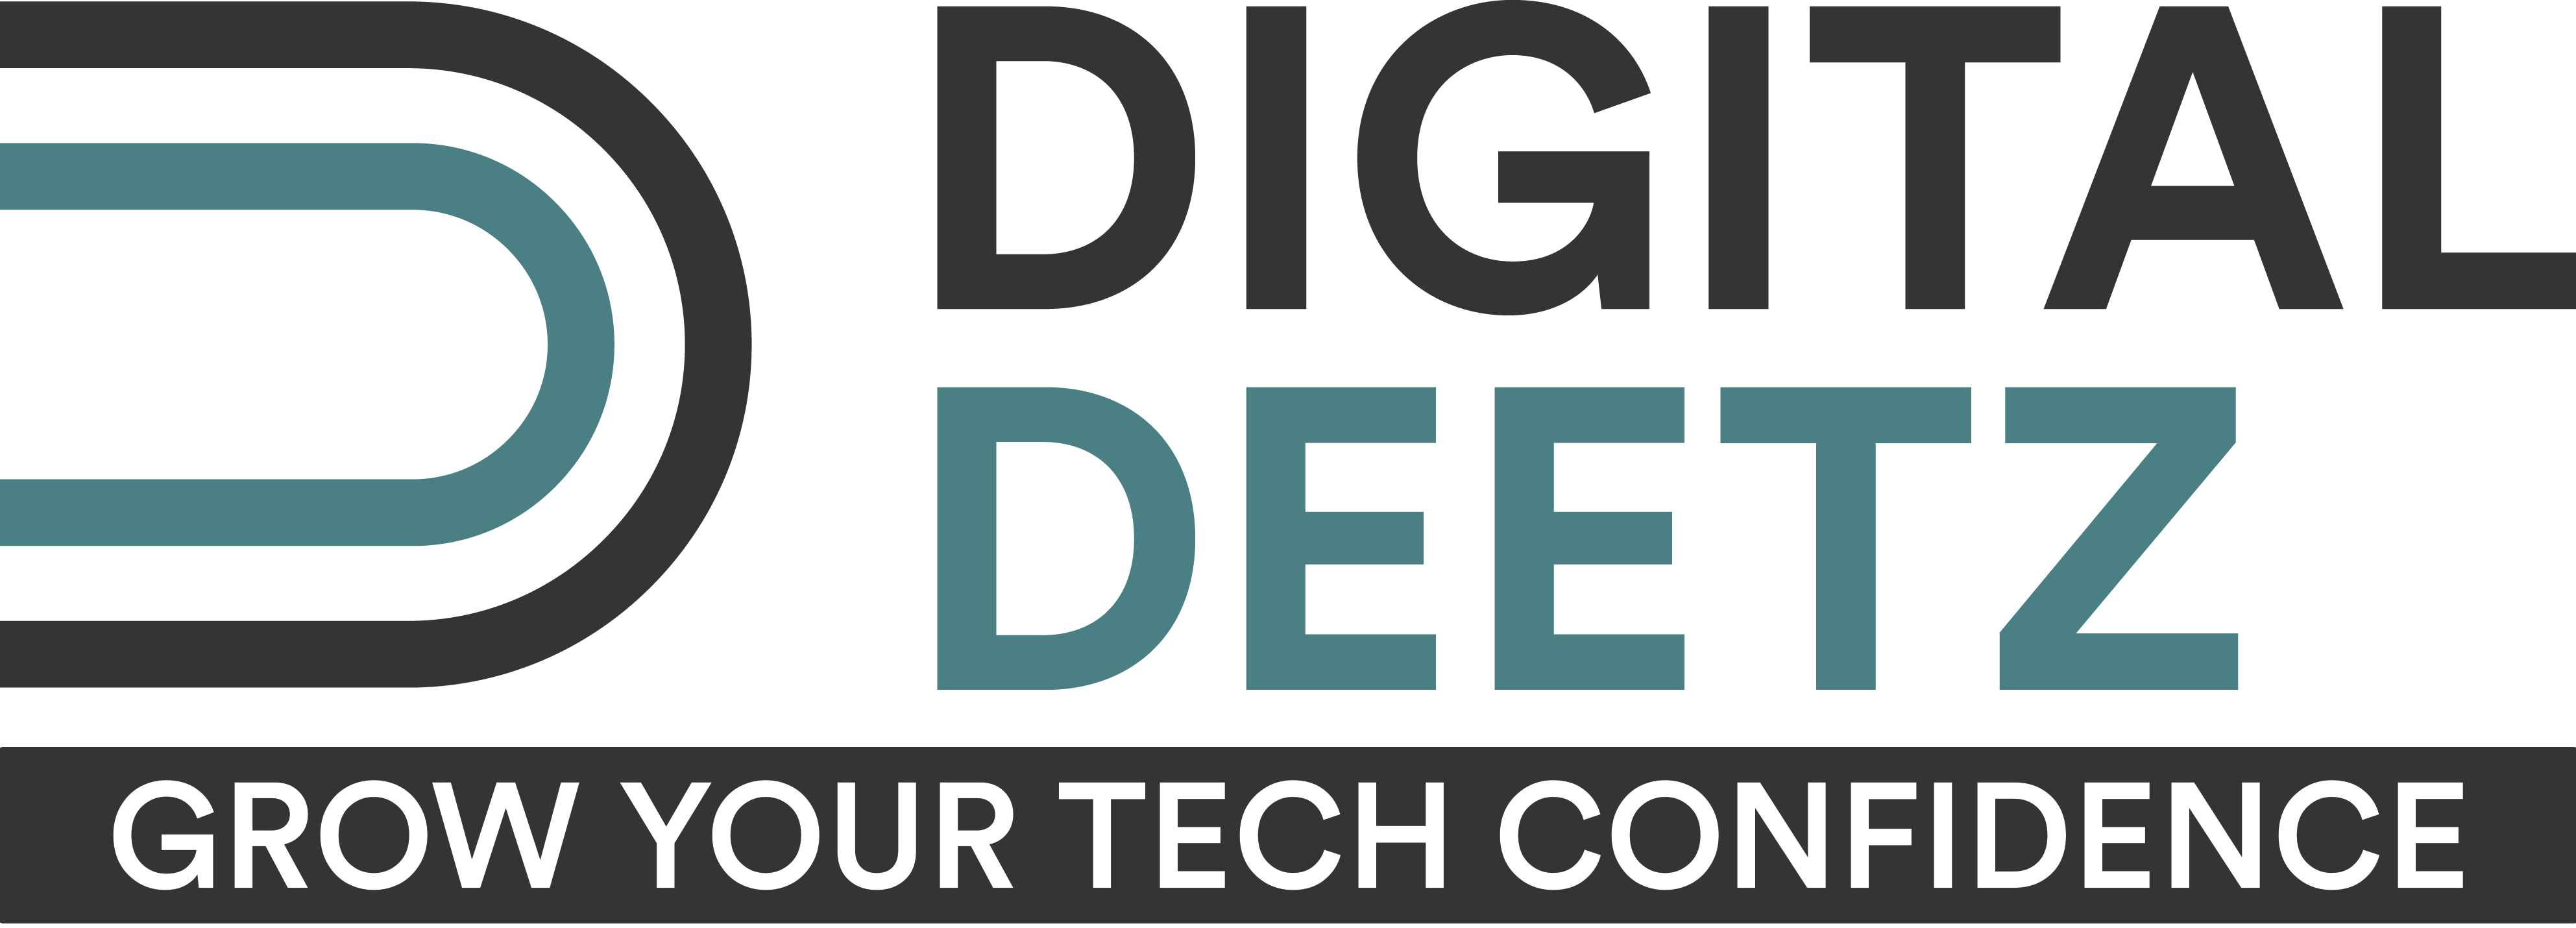 Digital Deetz - Grow Your Tech Confidence